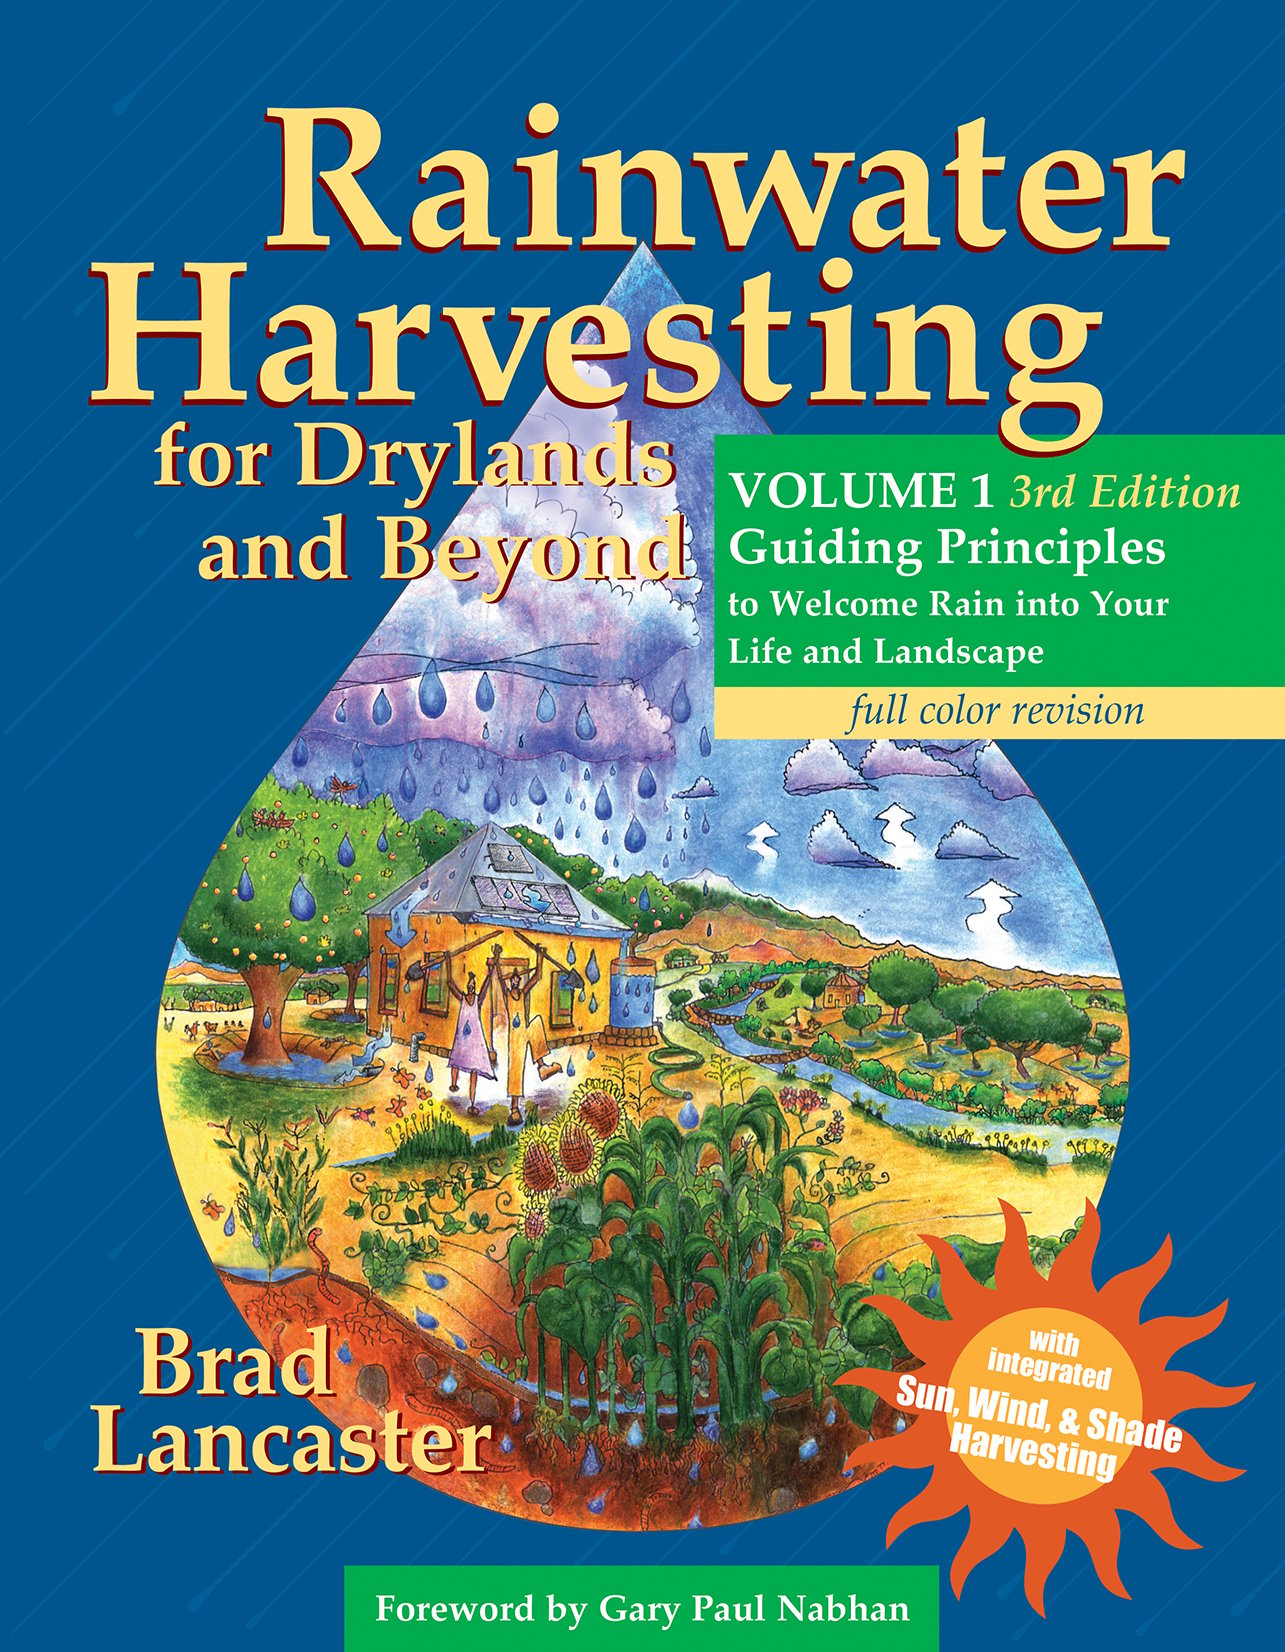 Brad Lancaster: Rainwater Harvesting for Drylands and Beyond, Volume 1, 3rd Edition (2019, Rainsource Press)